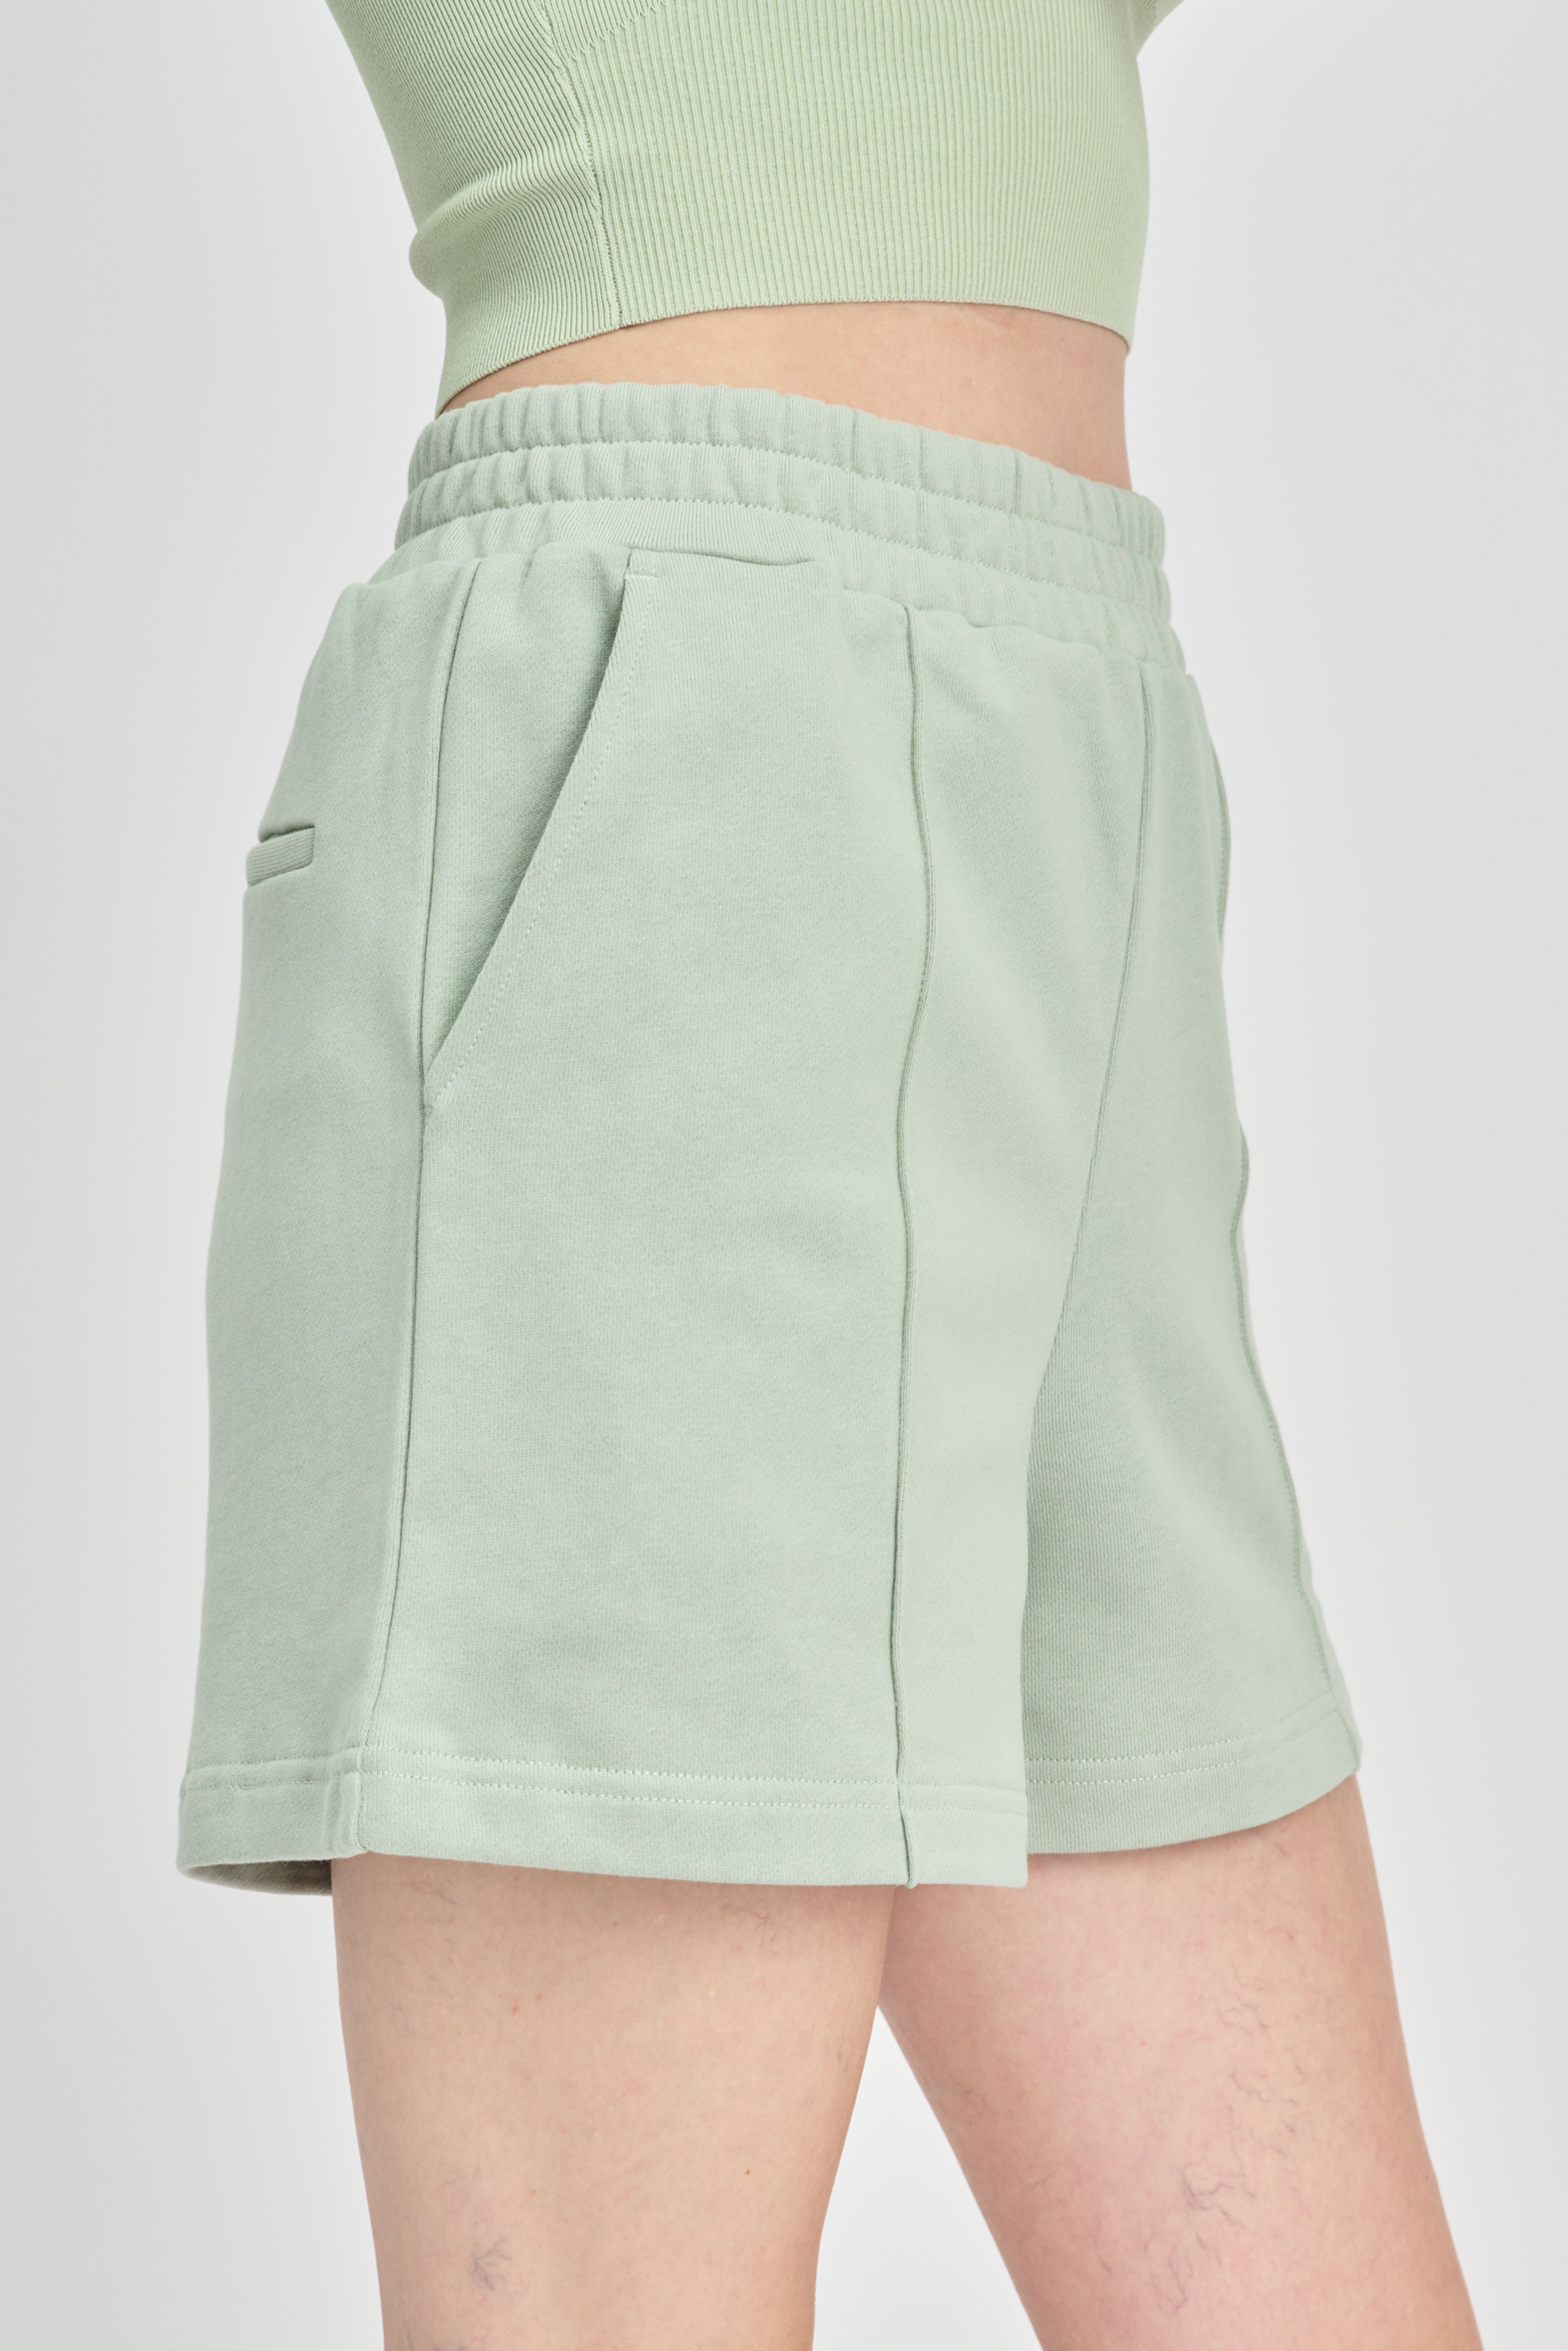 VENICE cotton shorts (Light green)